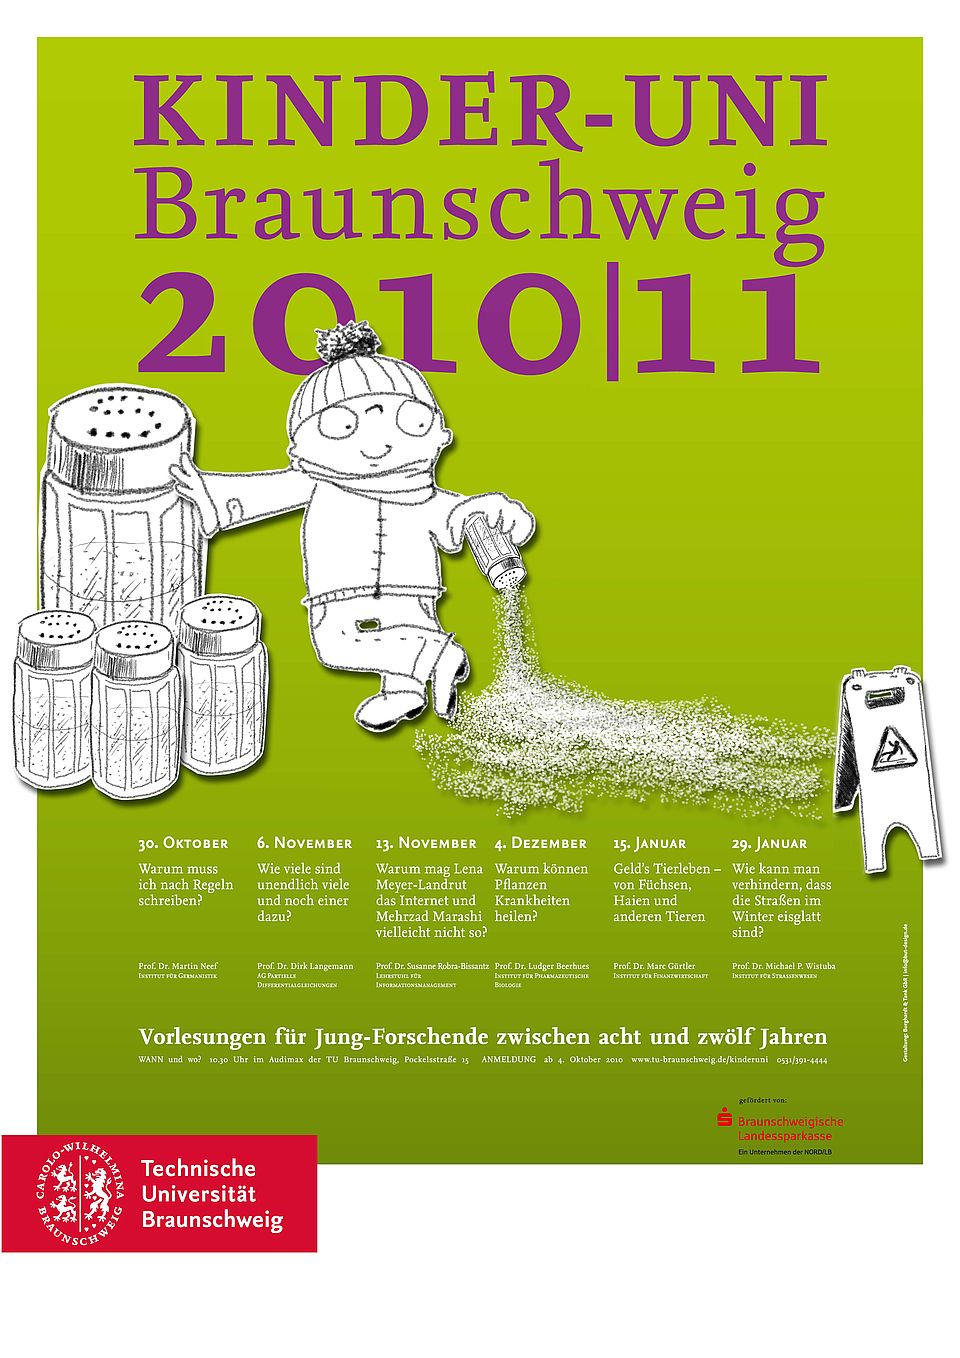 2010 Plakat Kinder-Uni